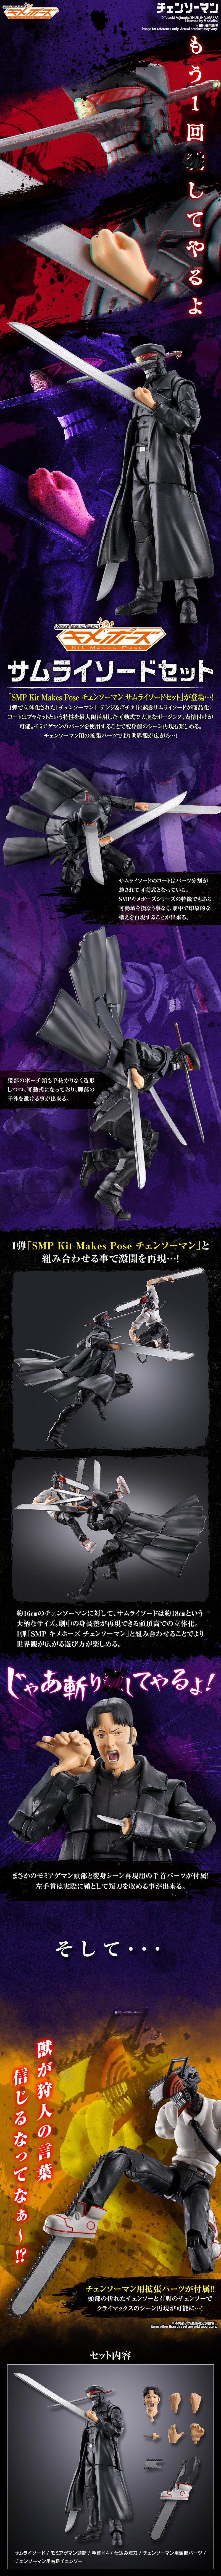 SMP [SHOKUGAN MODELING PROJECT] KIT MAKES POSE SAMURAI SWORD SET